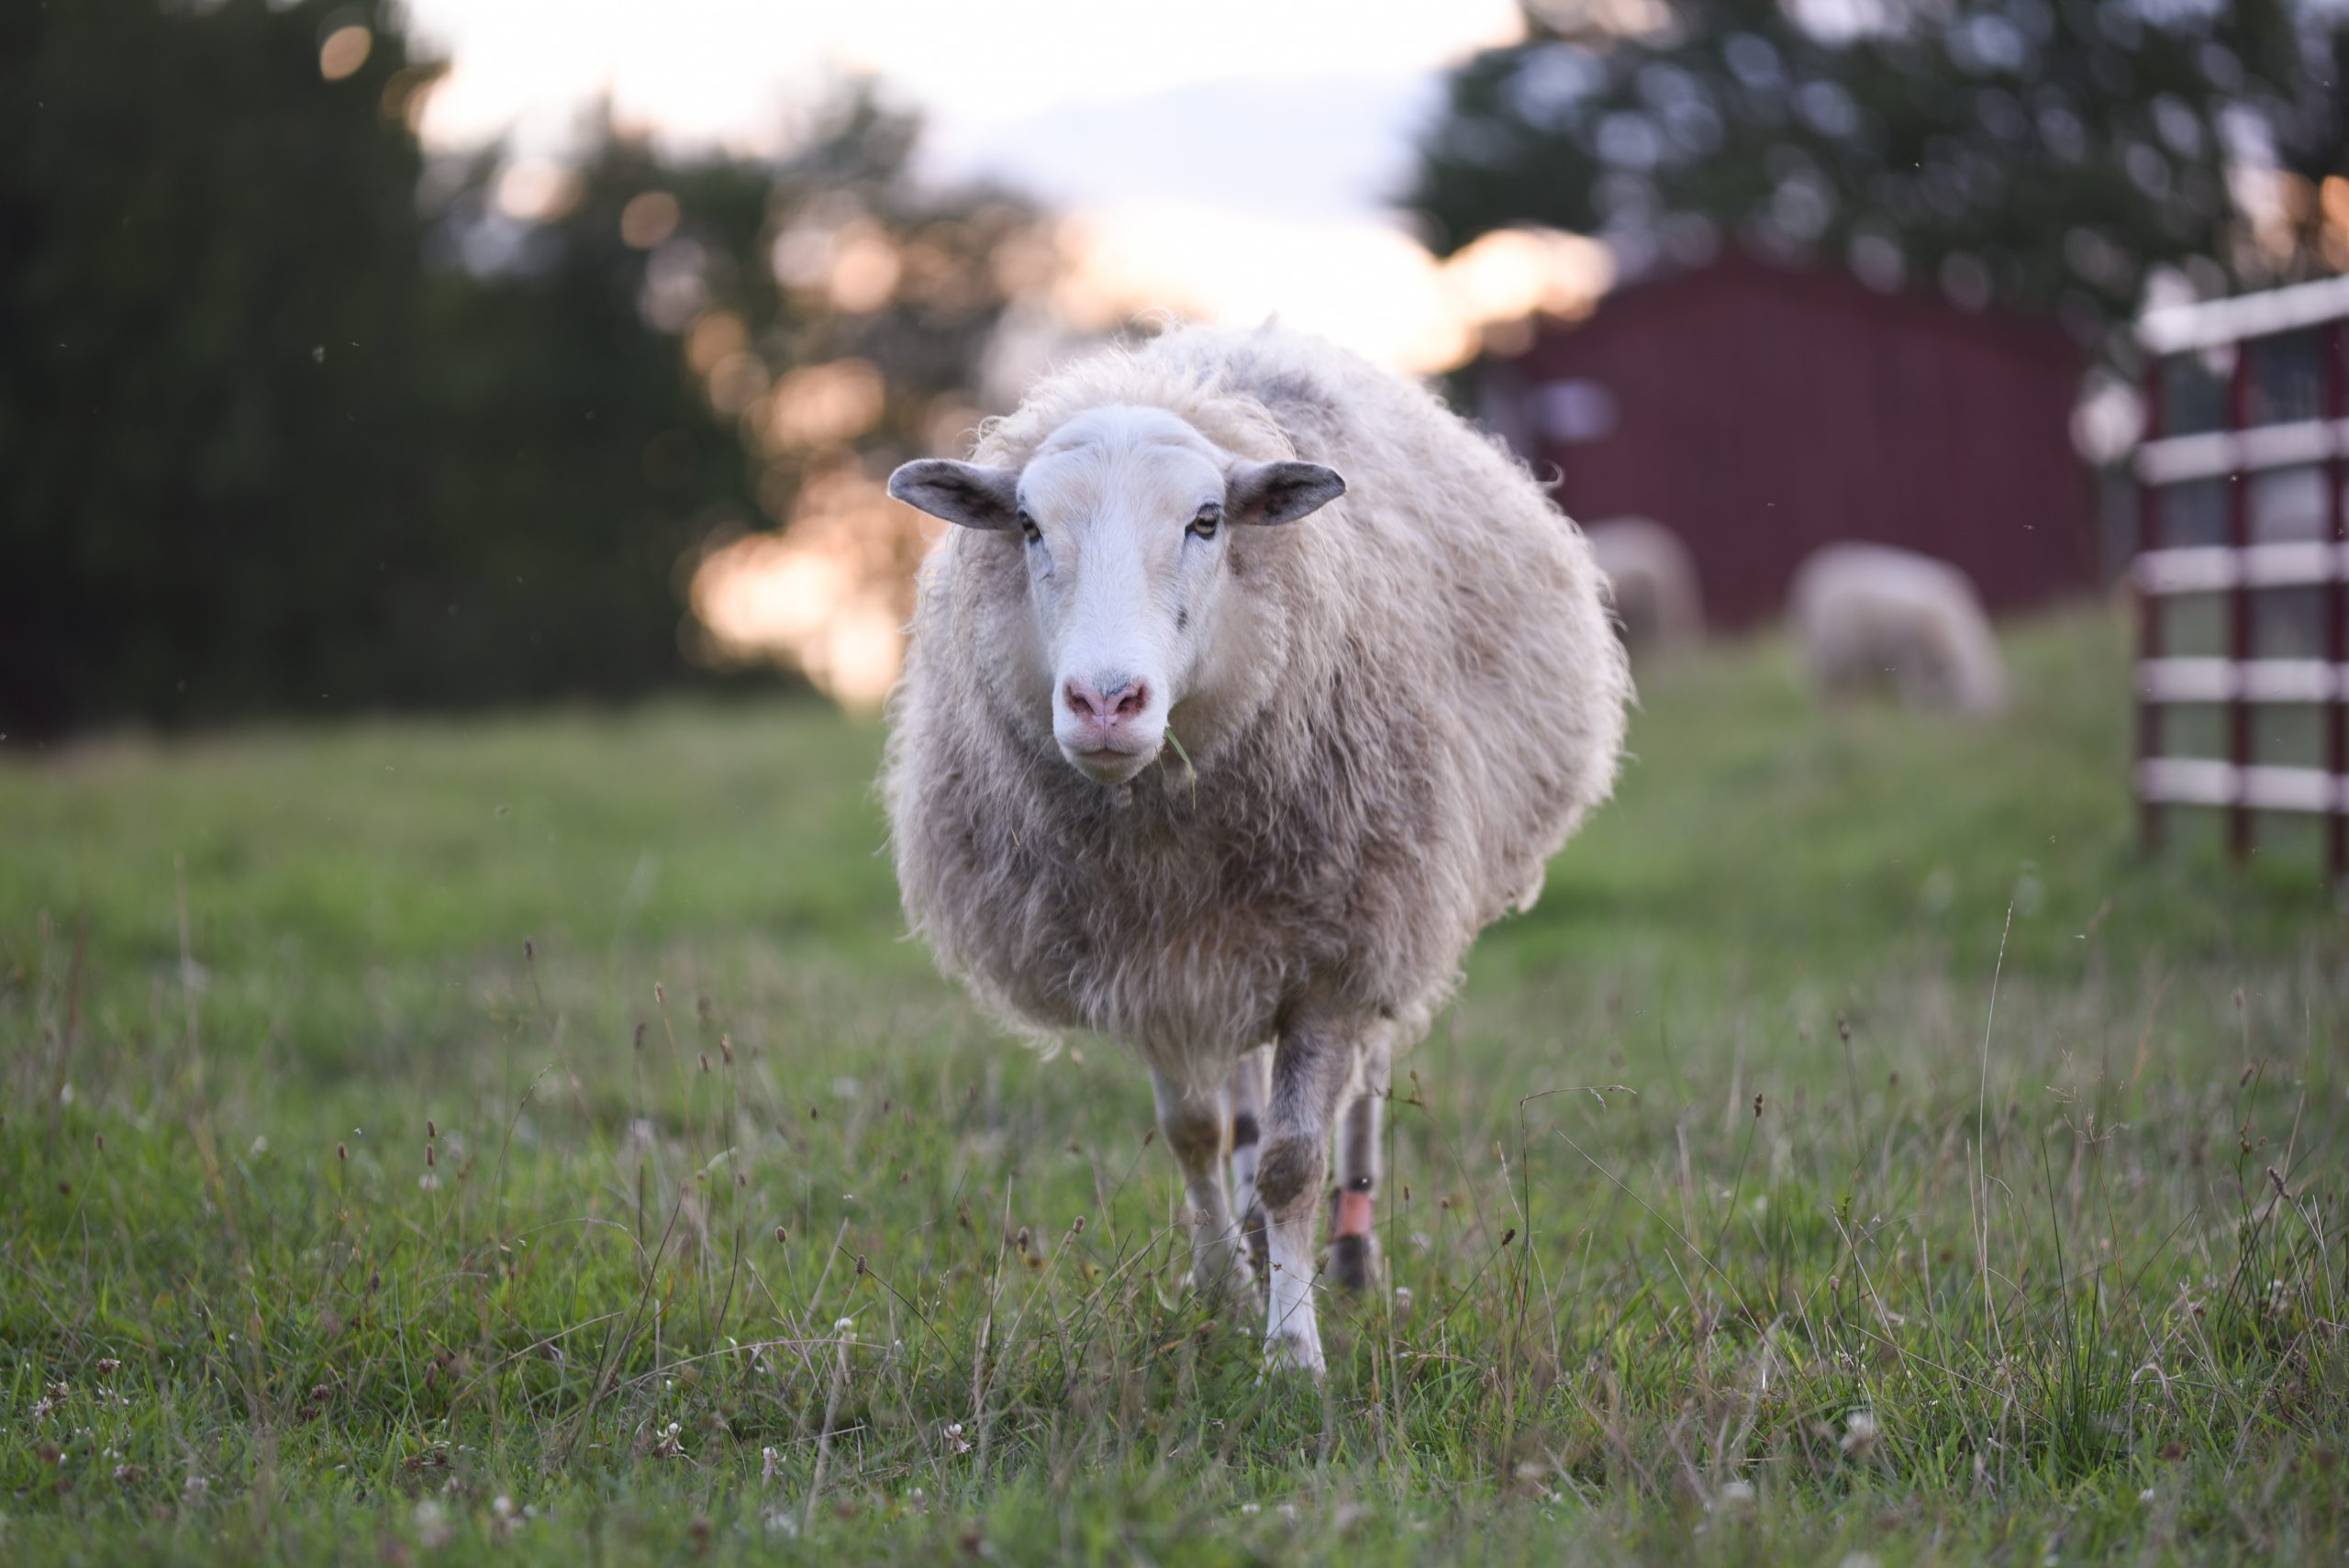 Adriano sheep at Farm Sanctuary